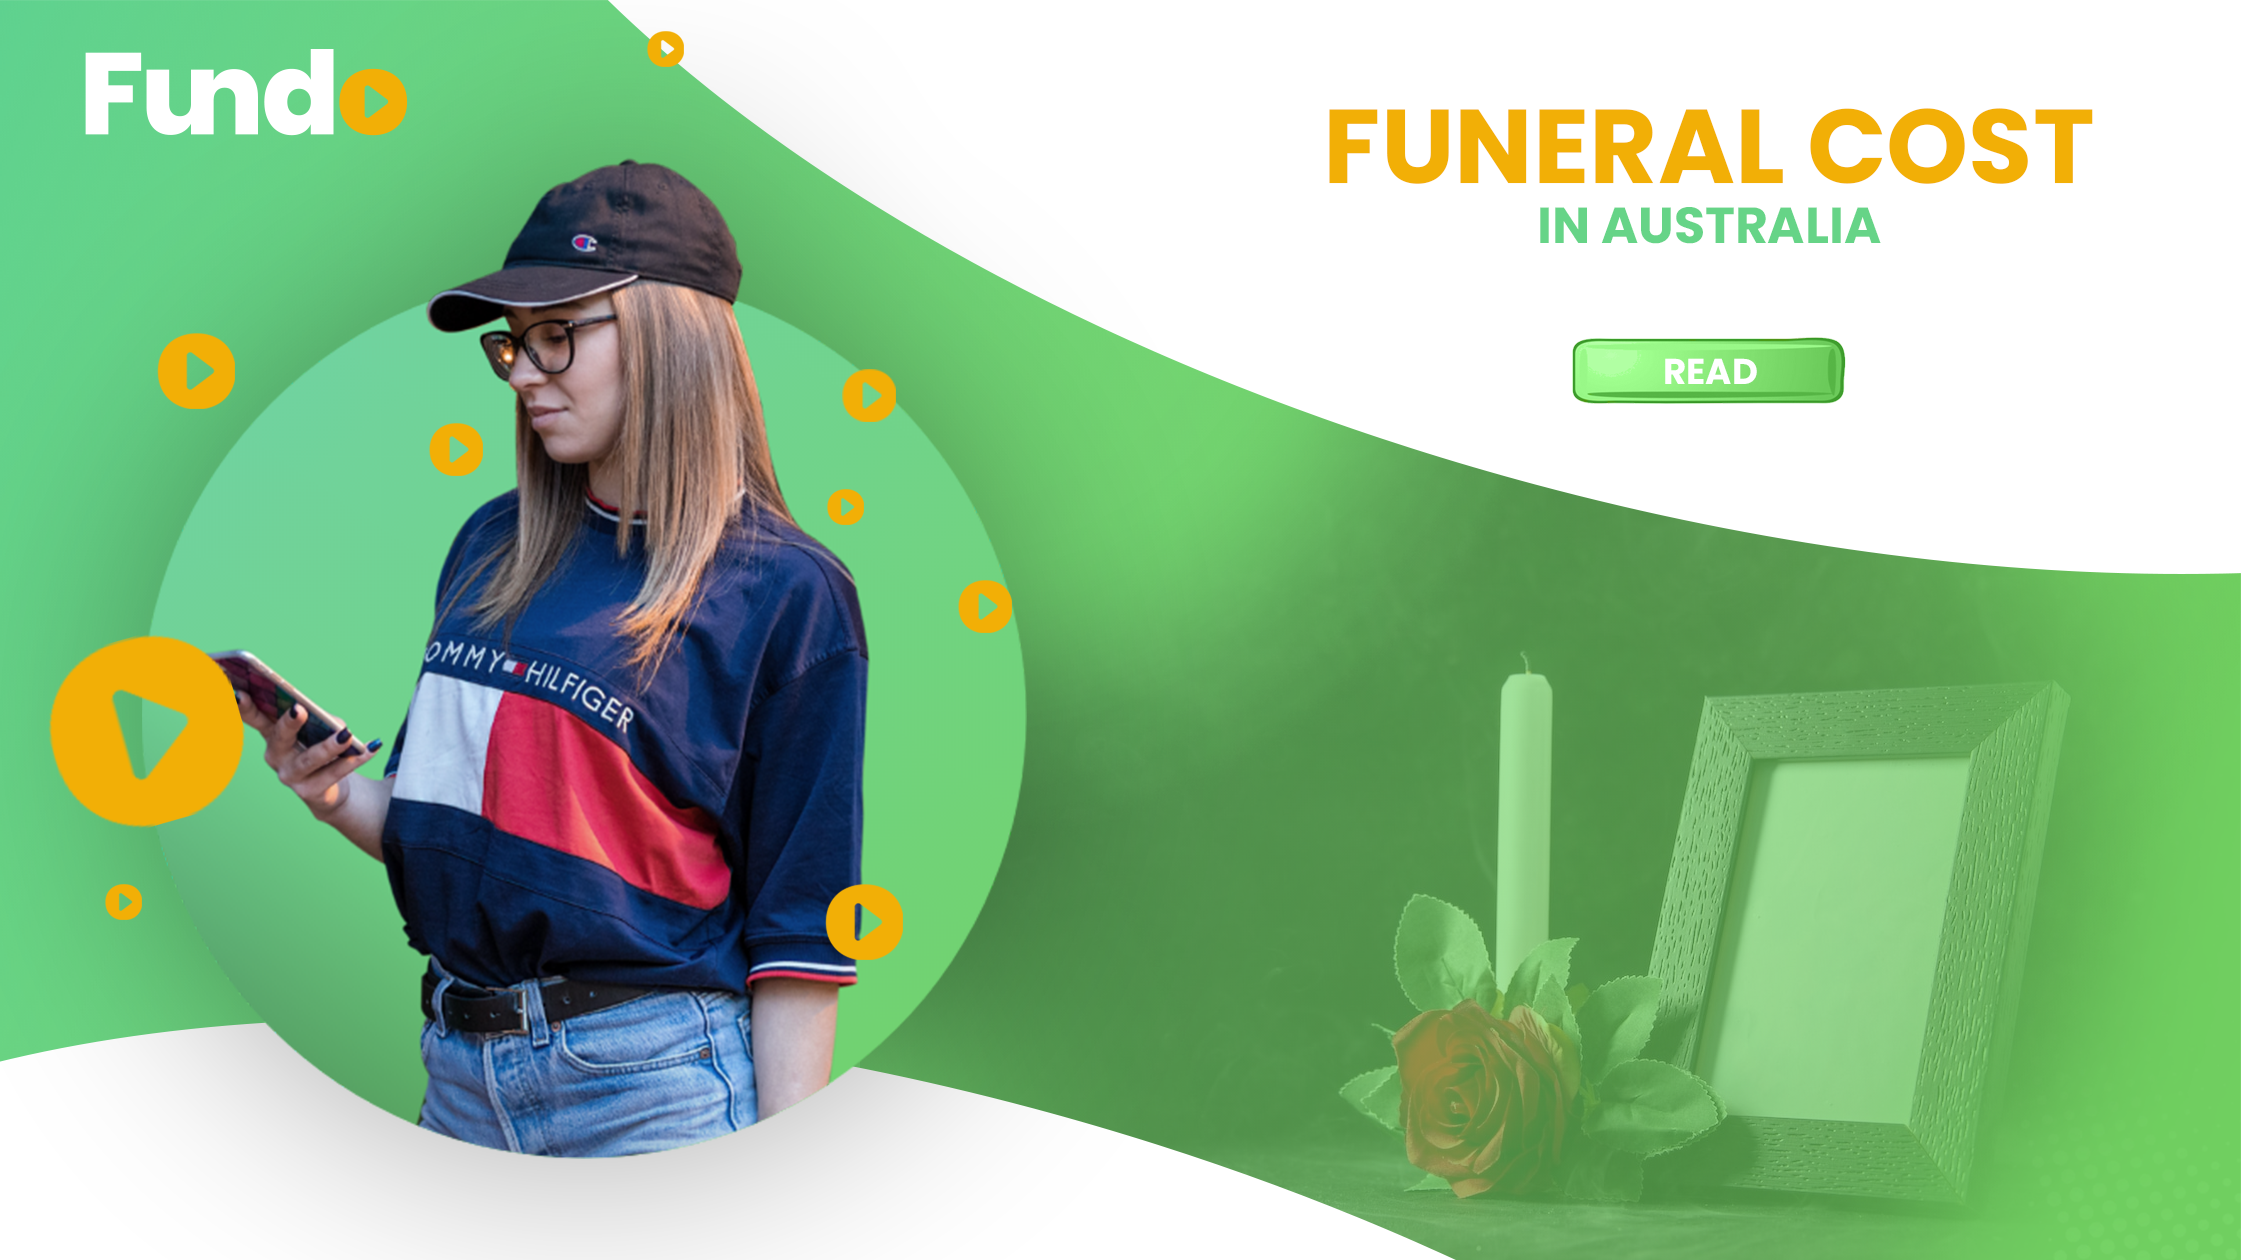 Funeral costs in Australia